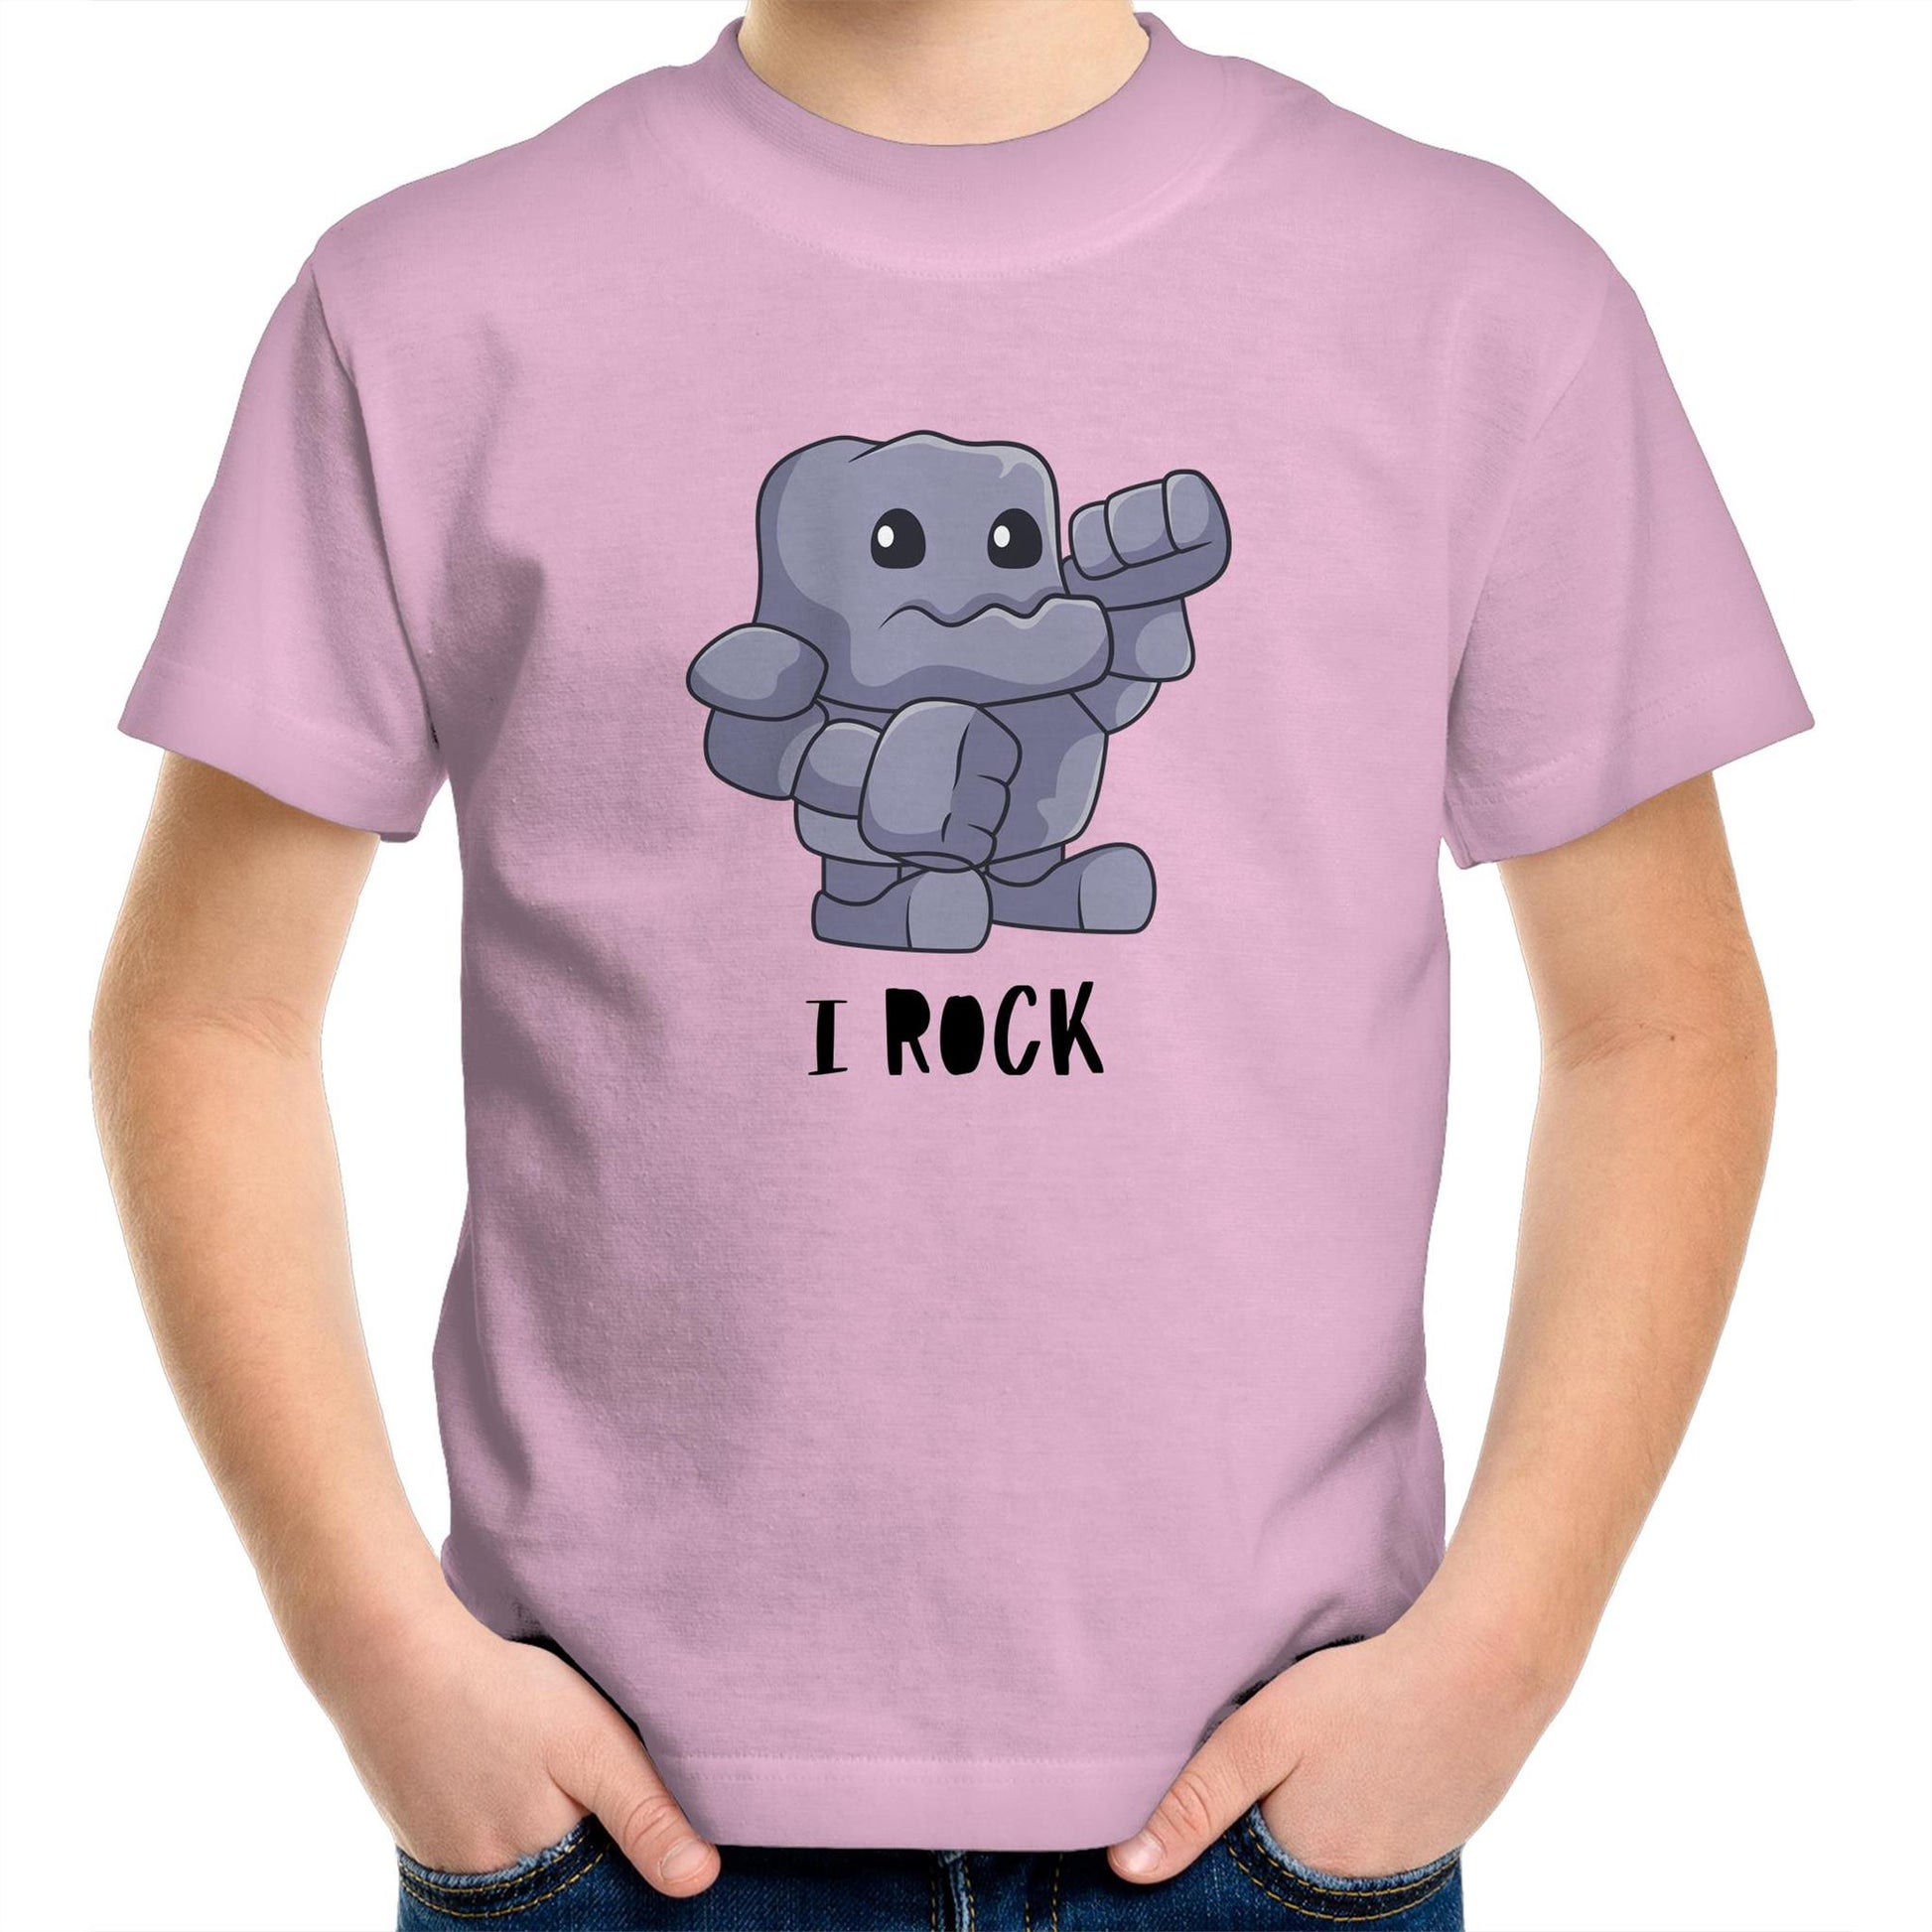 I Rock - Kids Youth T-Shirt Pink Kids Youth T-shirt Music